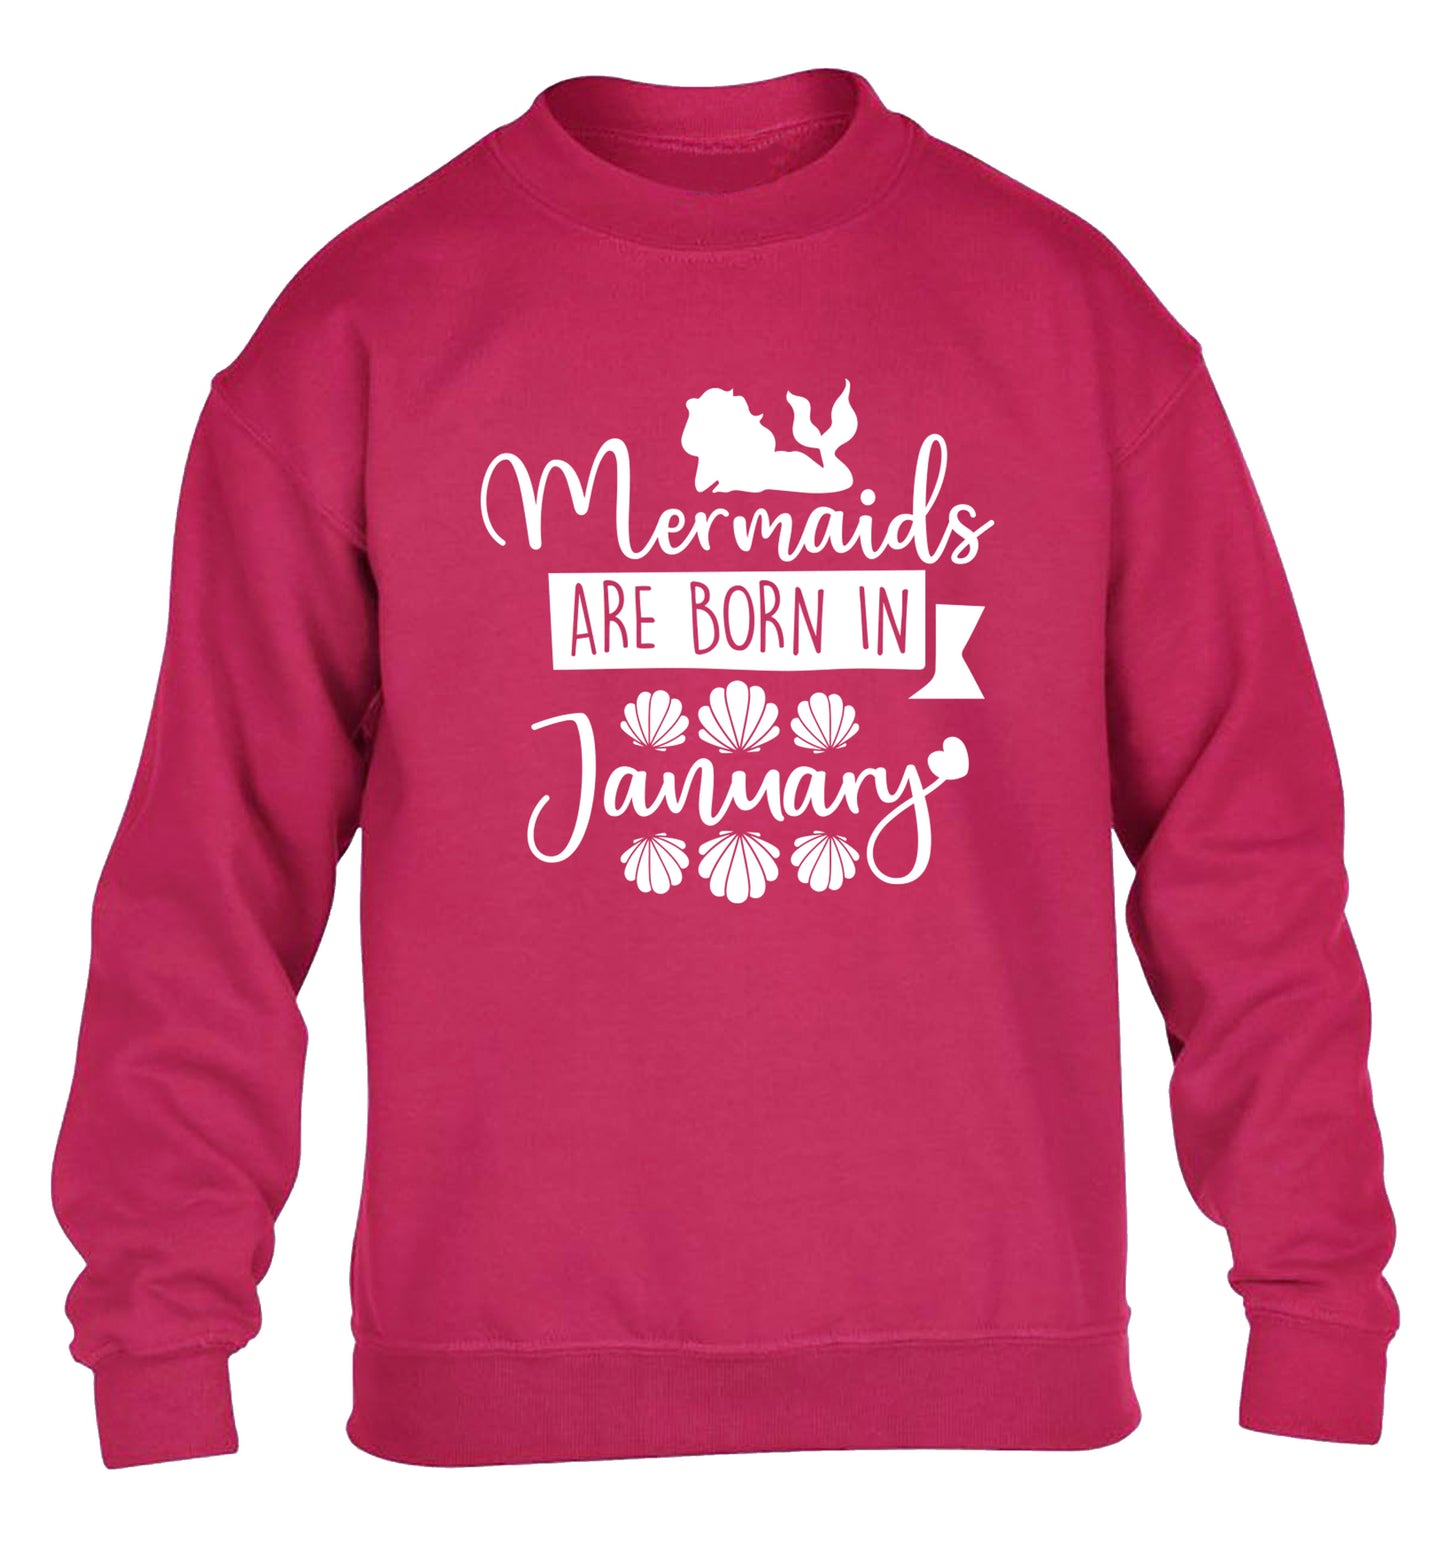 Mermaids are born in January children's pink sweater 12-13 Years